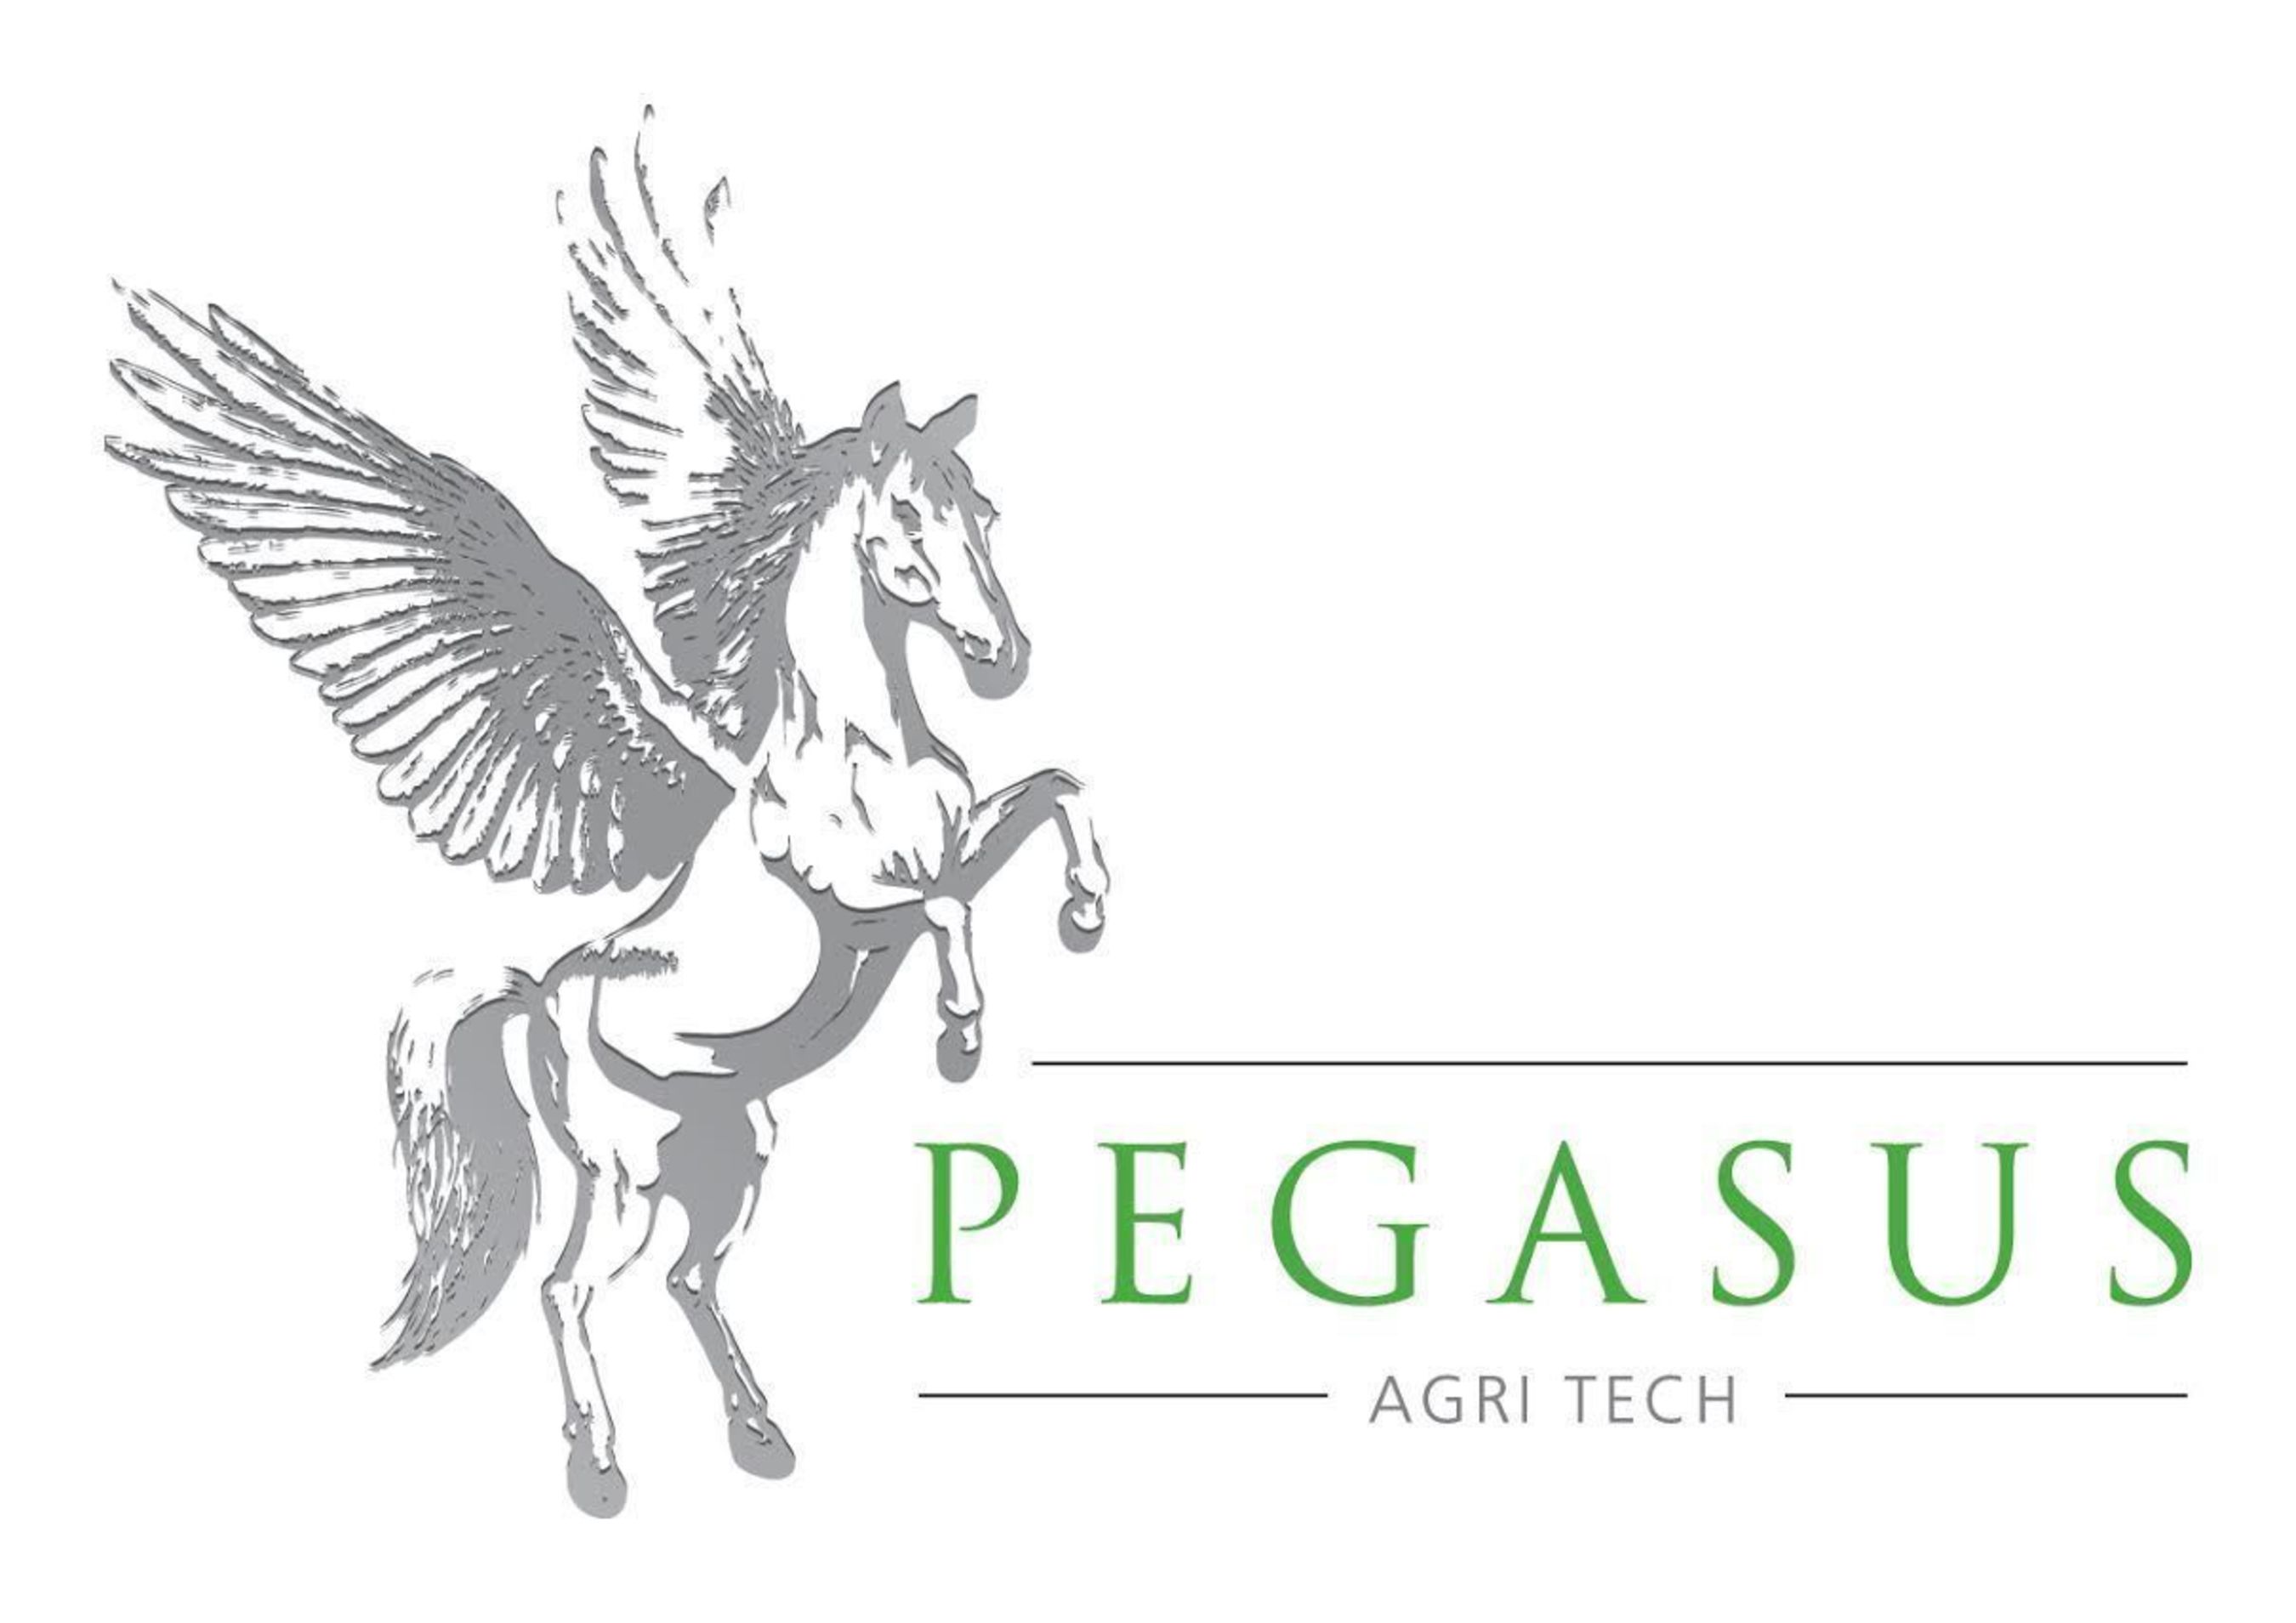 Pegasus Agritech (PRNewsFoto/Pegasus Agritech)